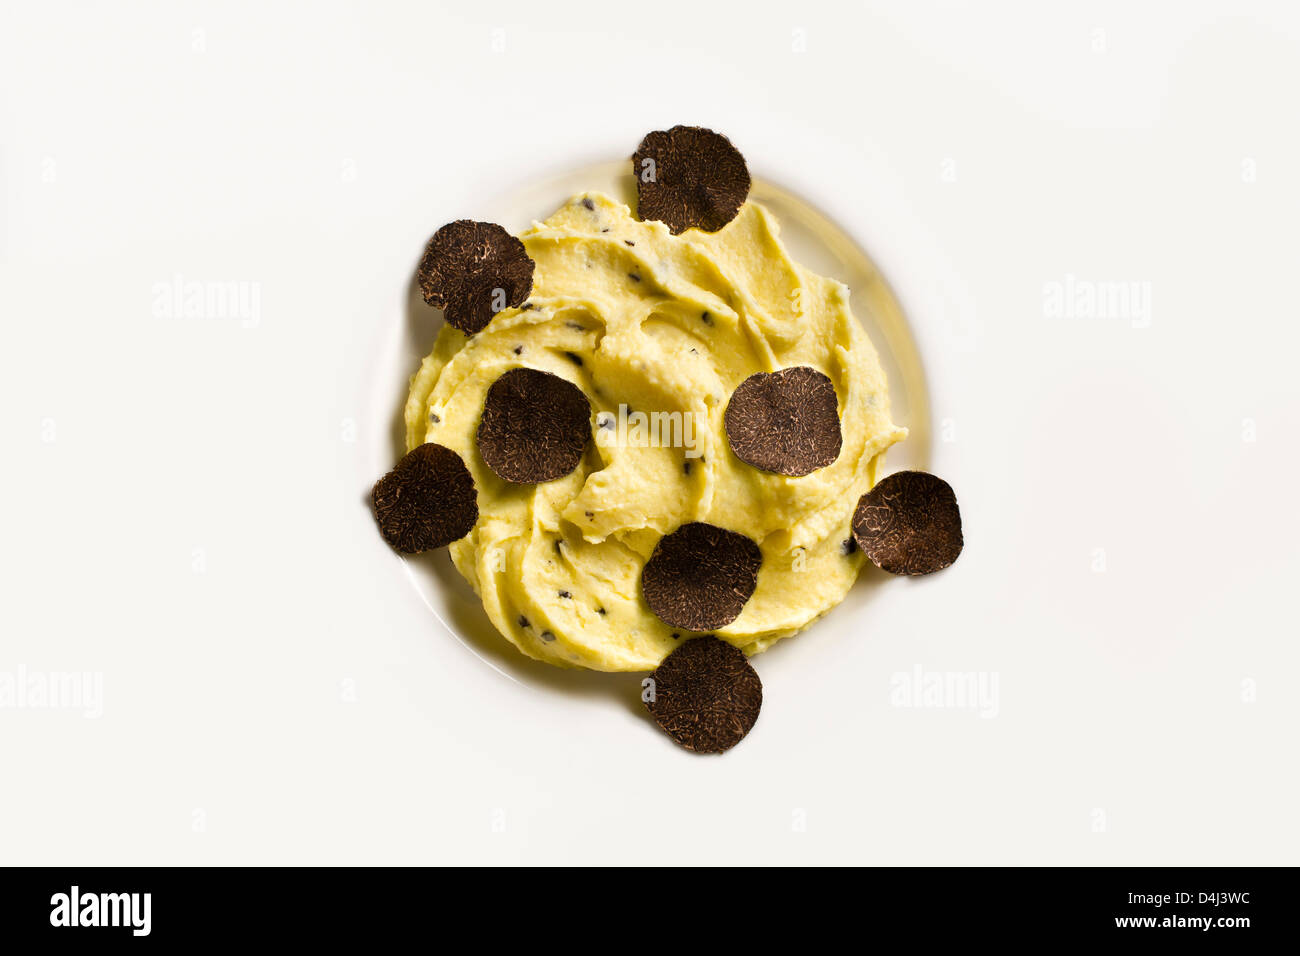 Potato purée with Black Truffles on a white plate. Stock Photo